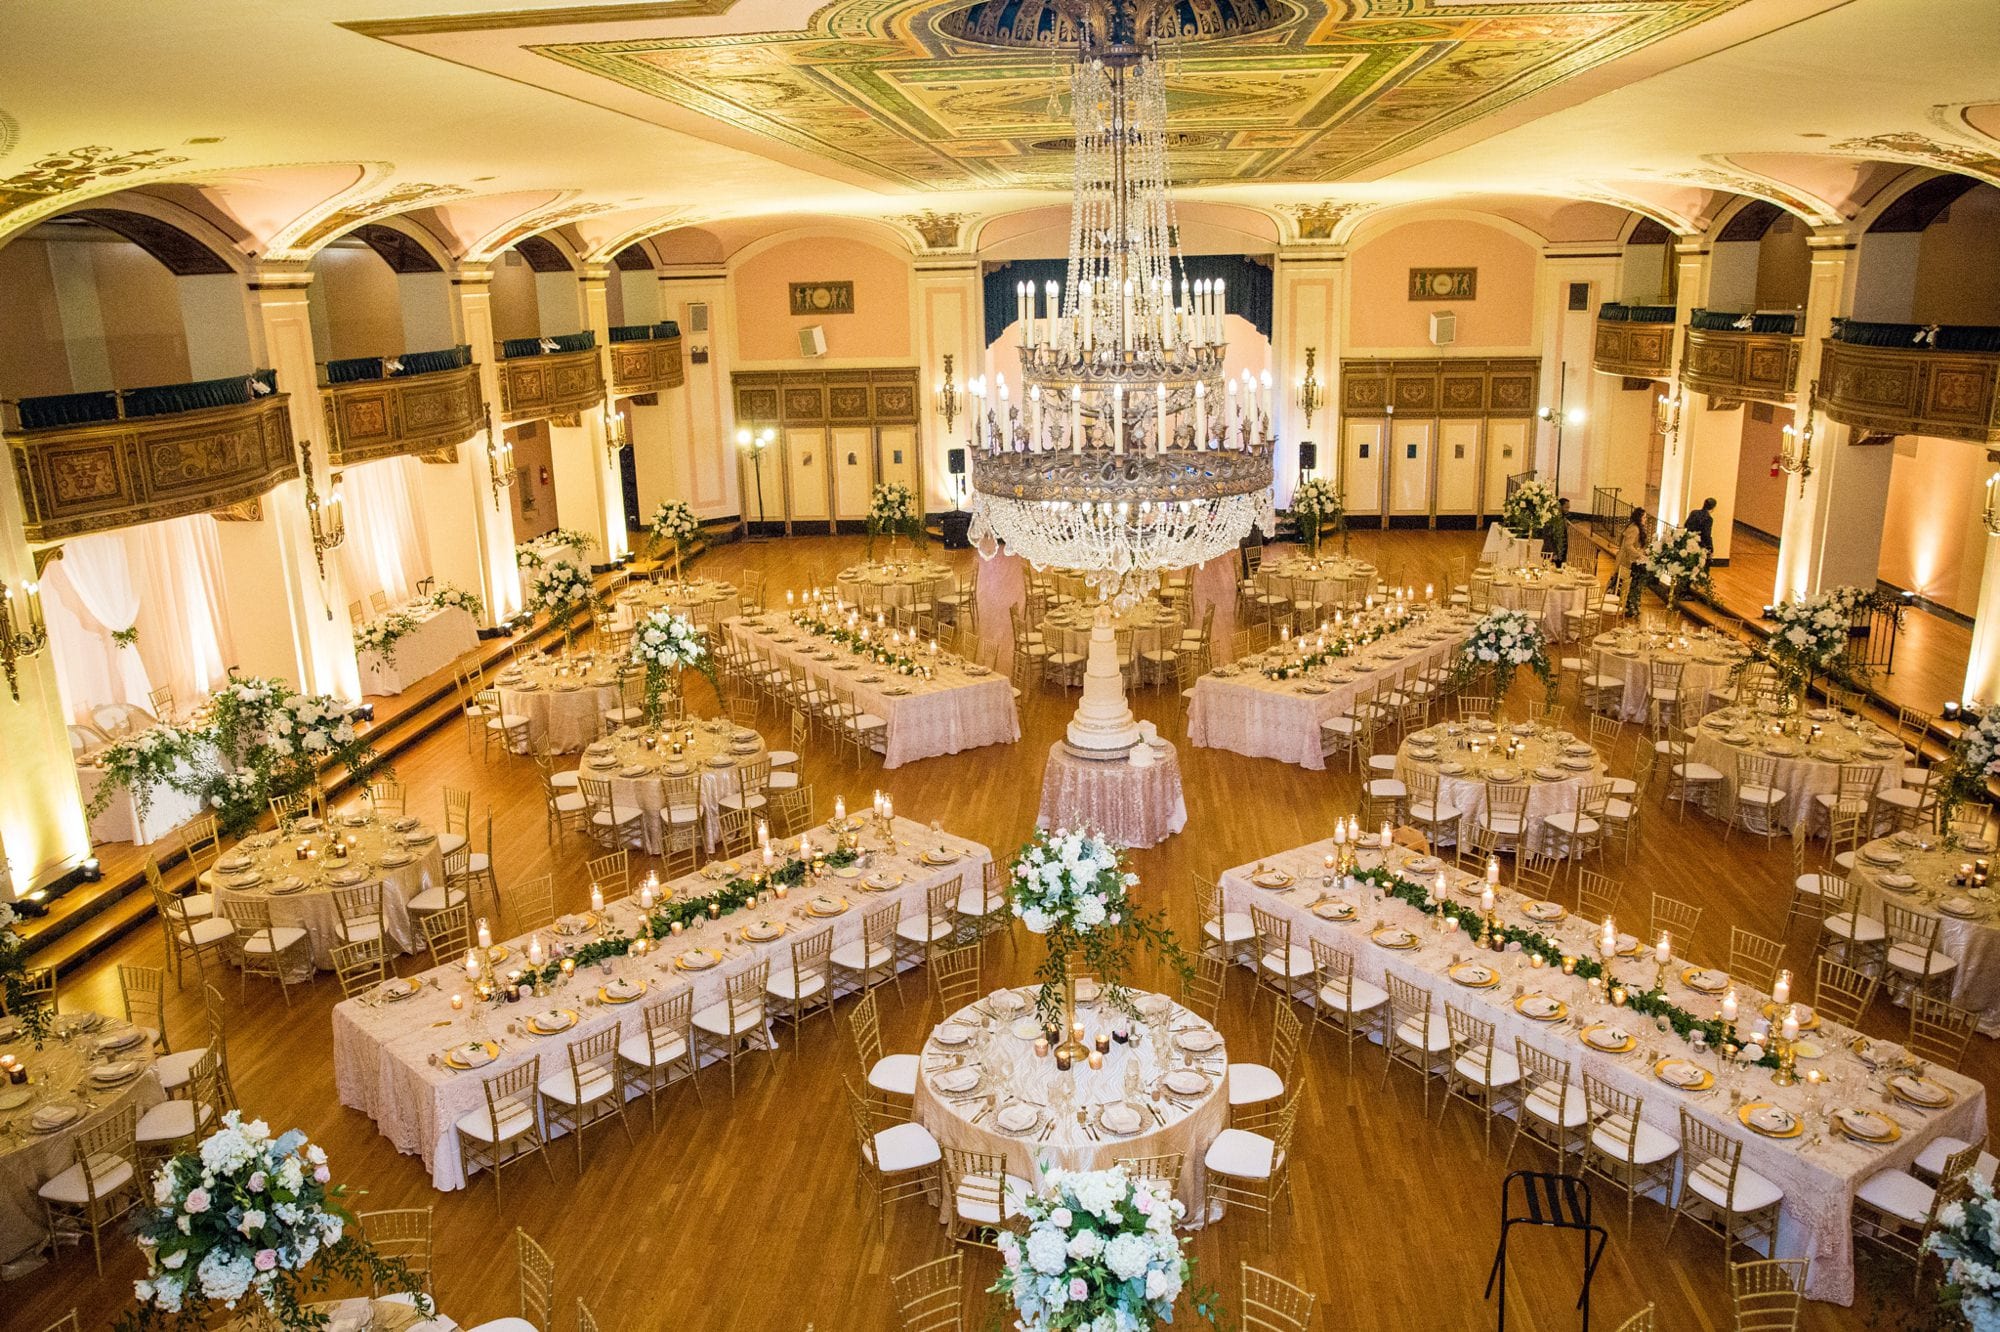 Masonic Temple Crystal Ballroom wedding reception